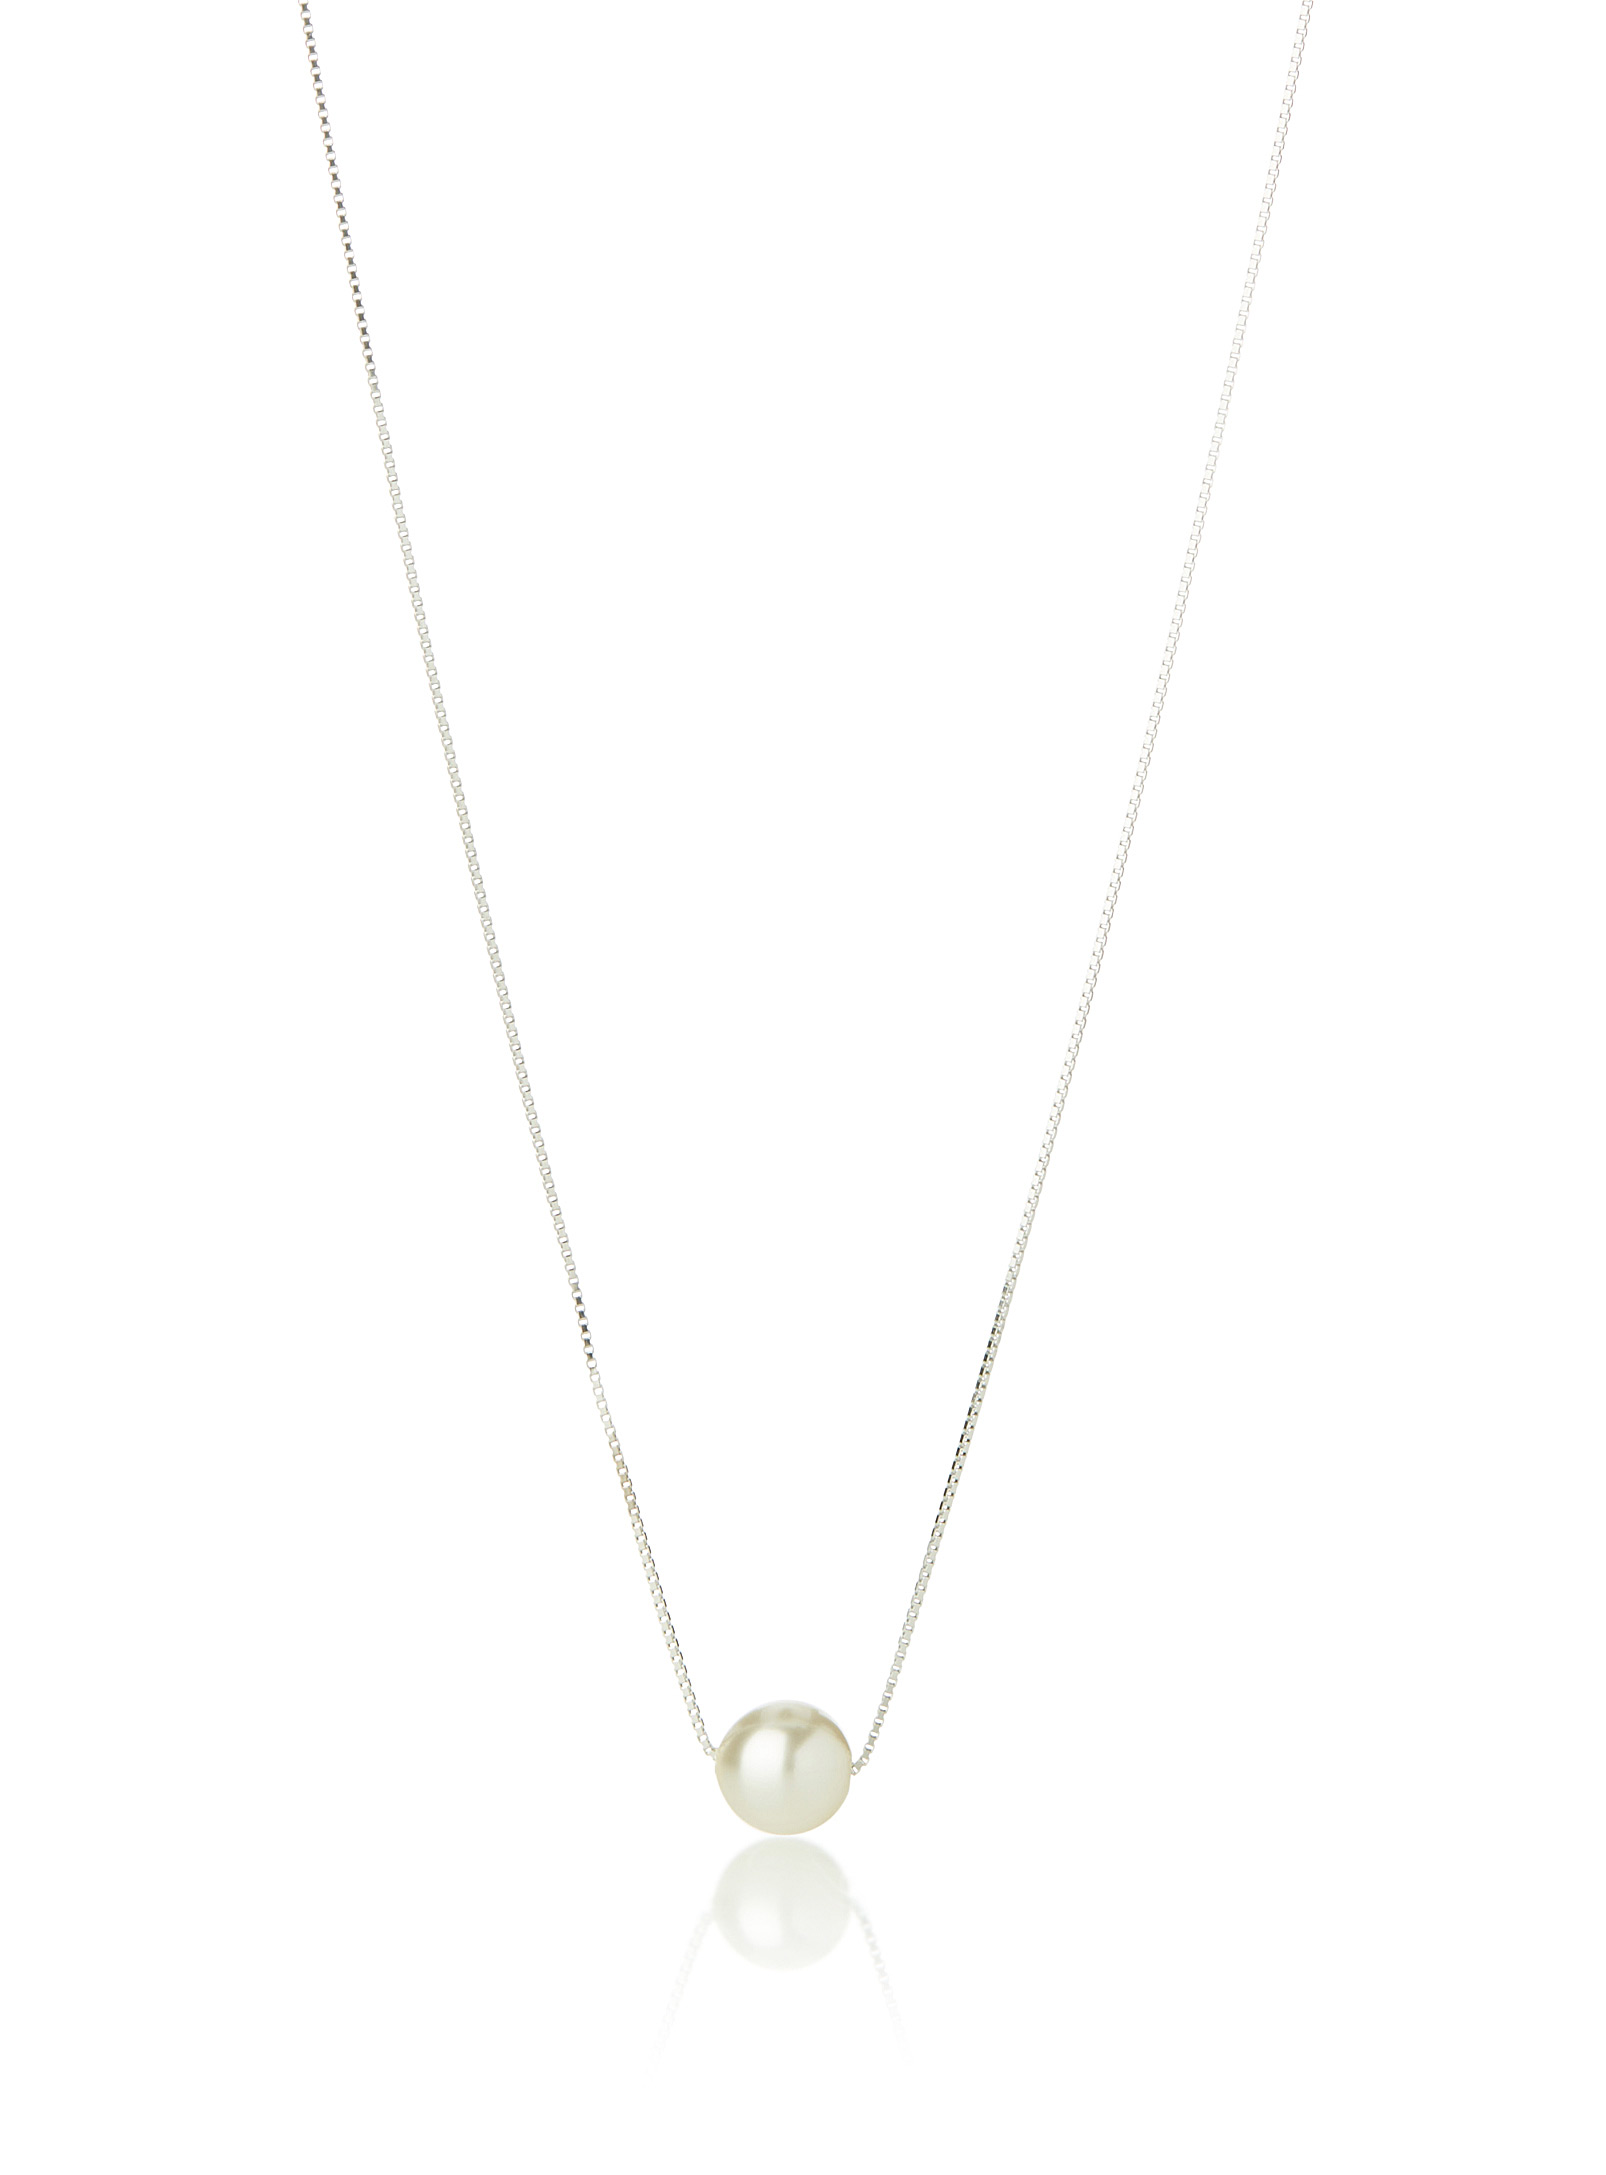 Simons - Women's Shiny pearl necklace